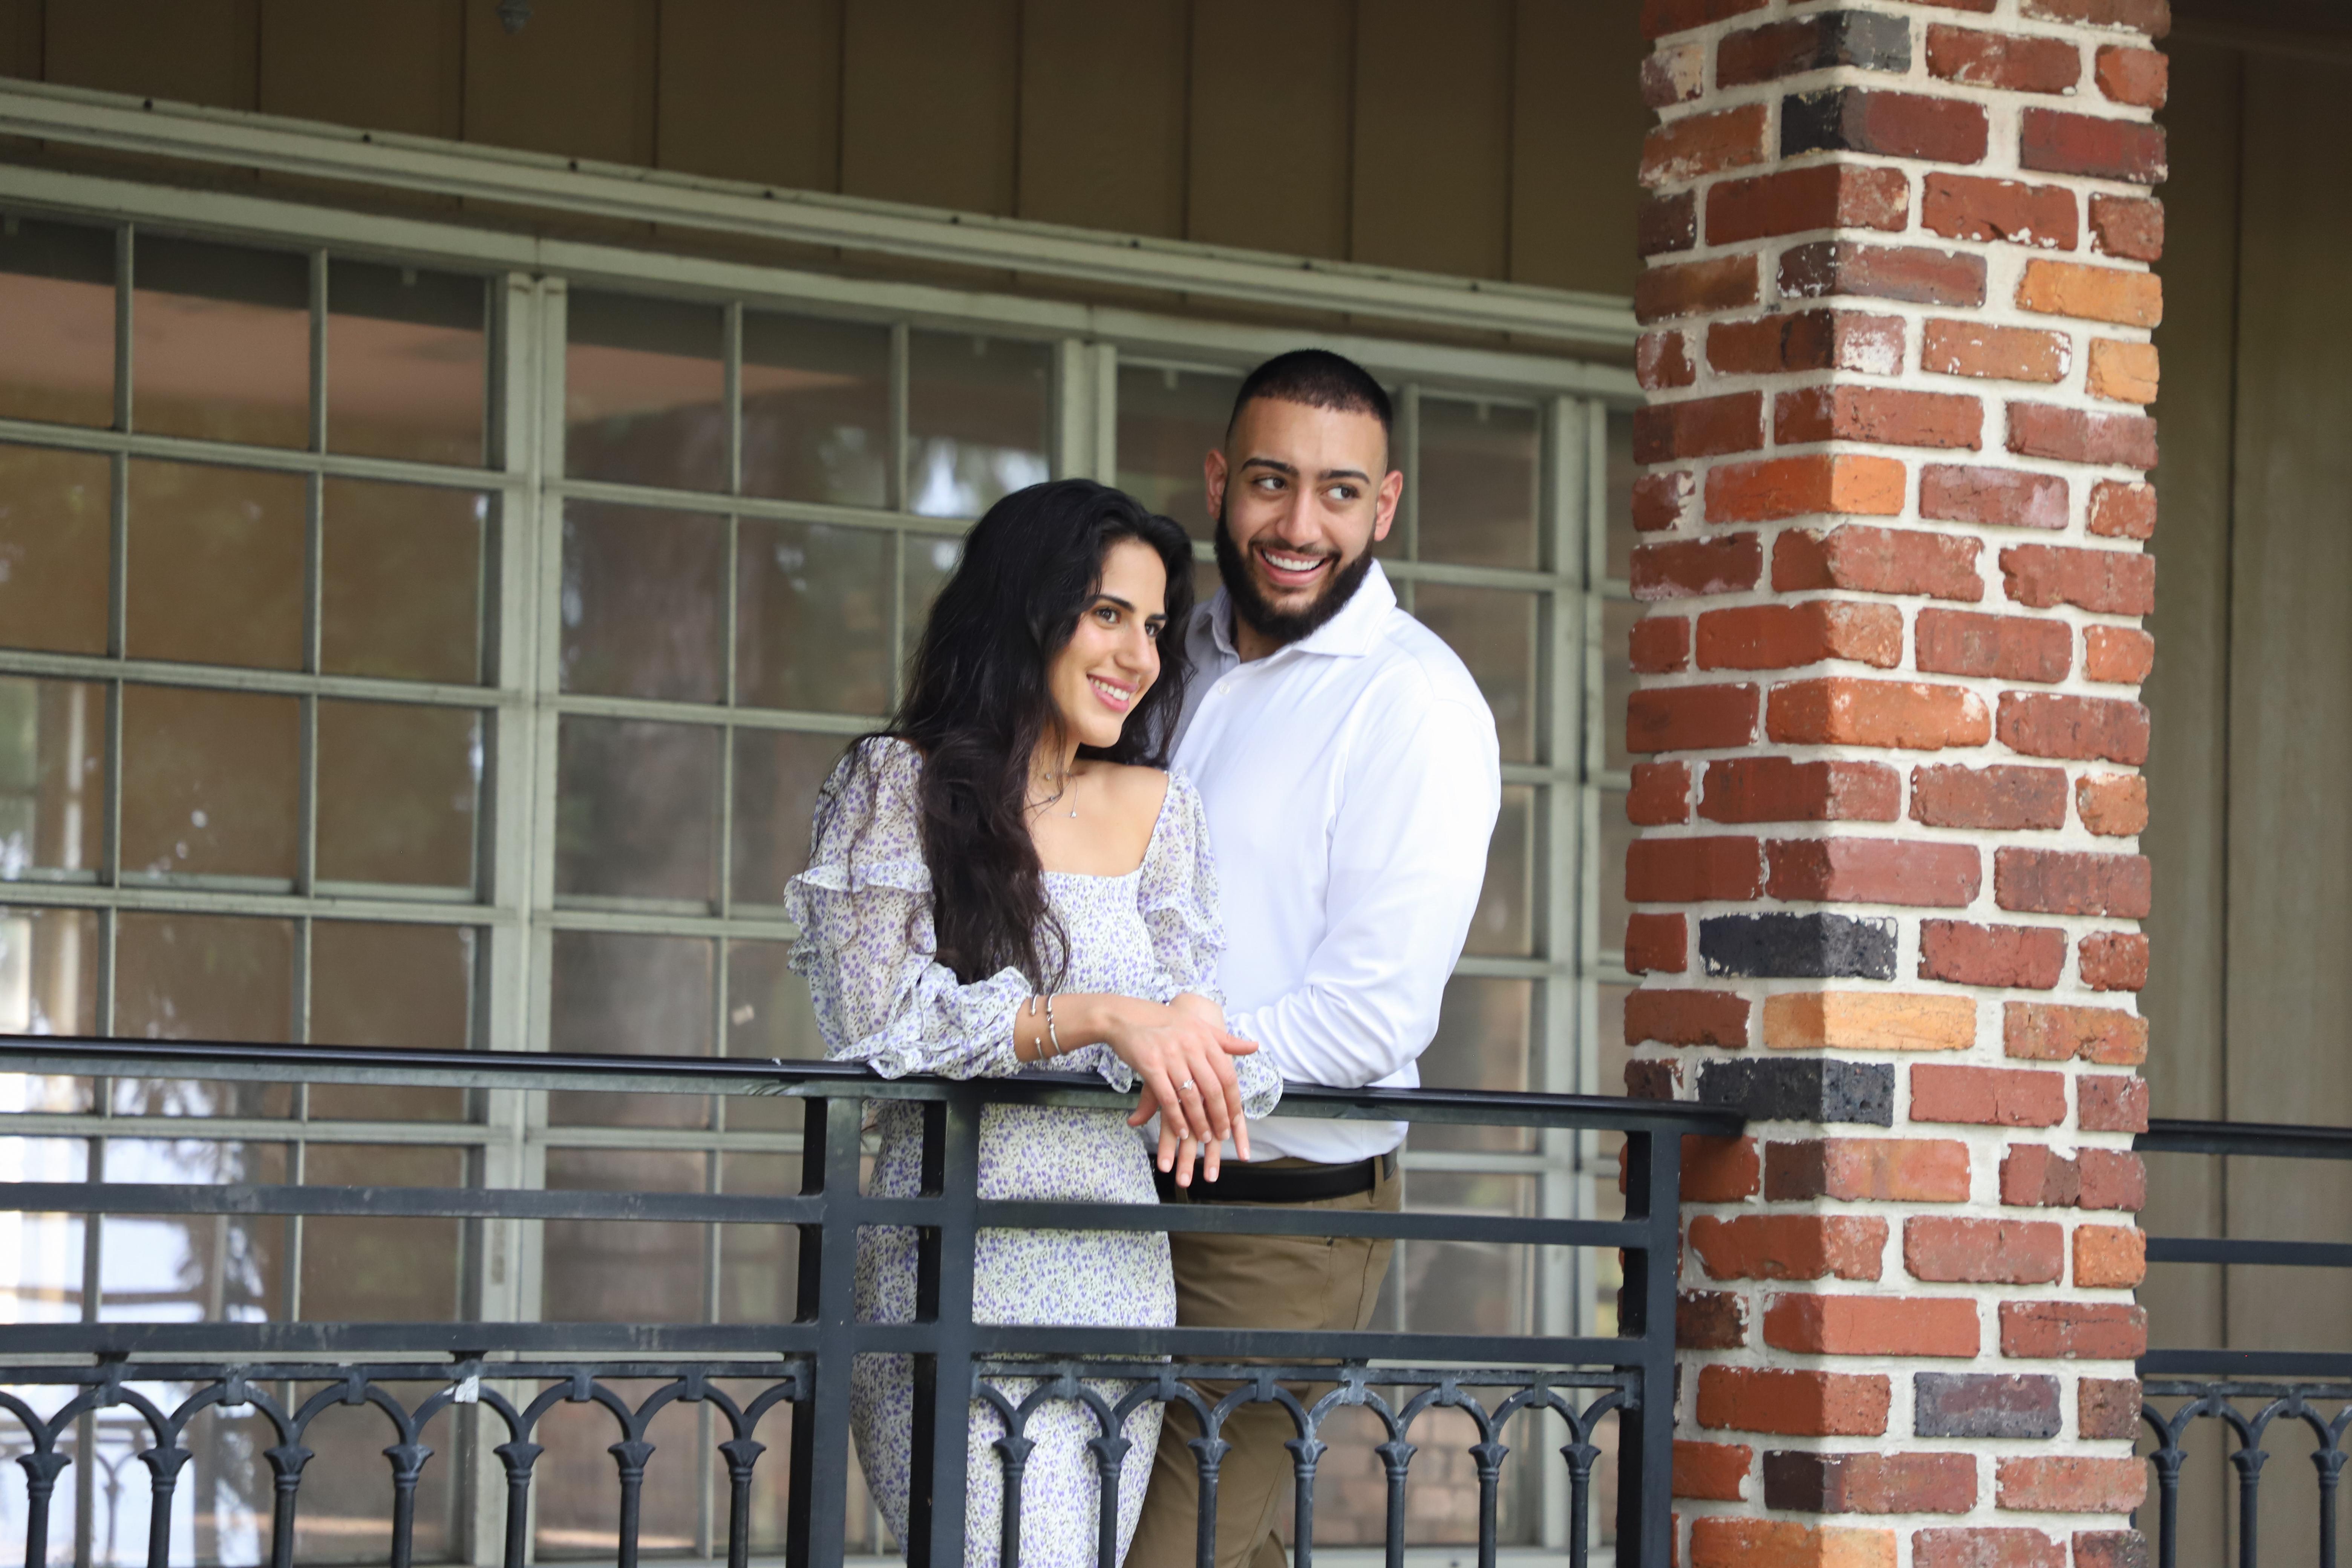 The Wedding Website of Aciel Shehadeh and Tamer Dauod